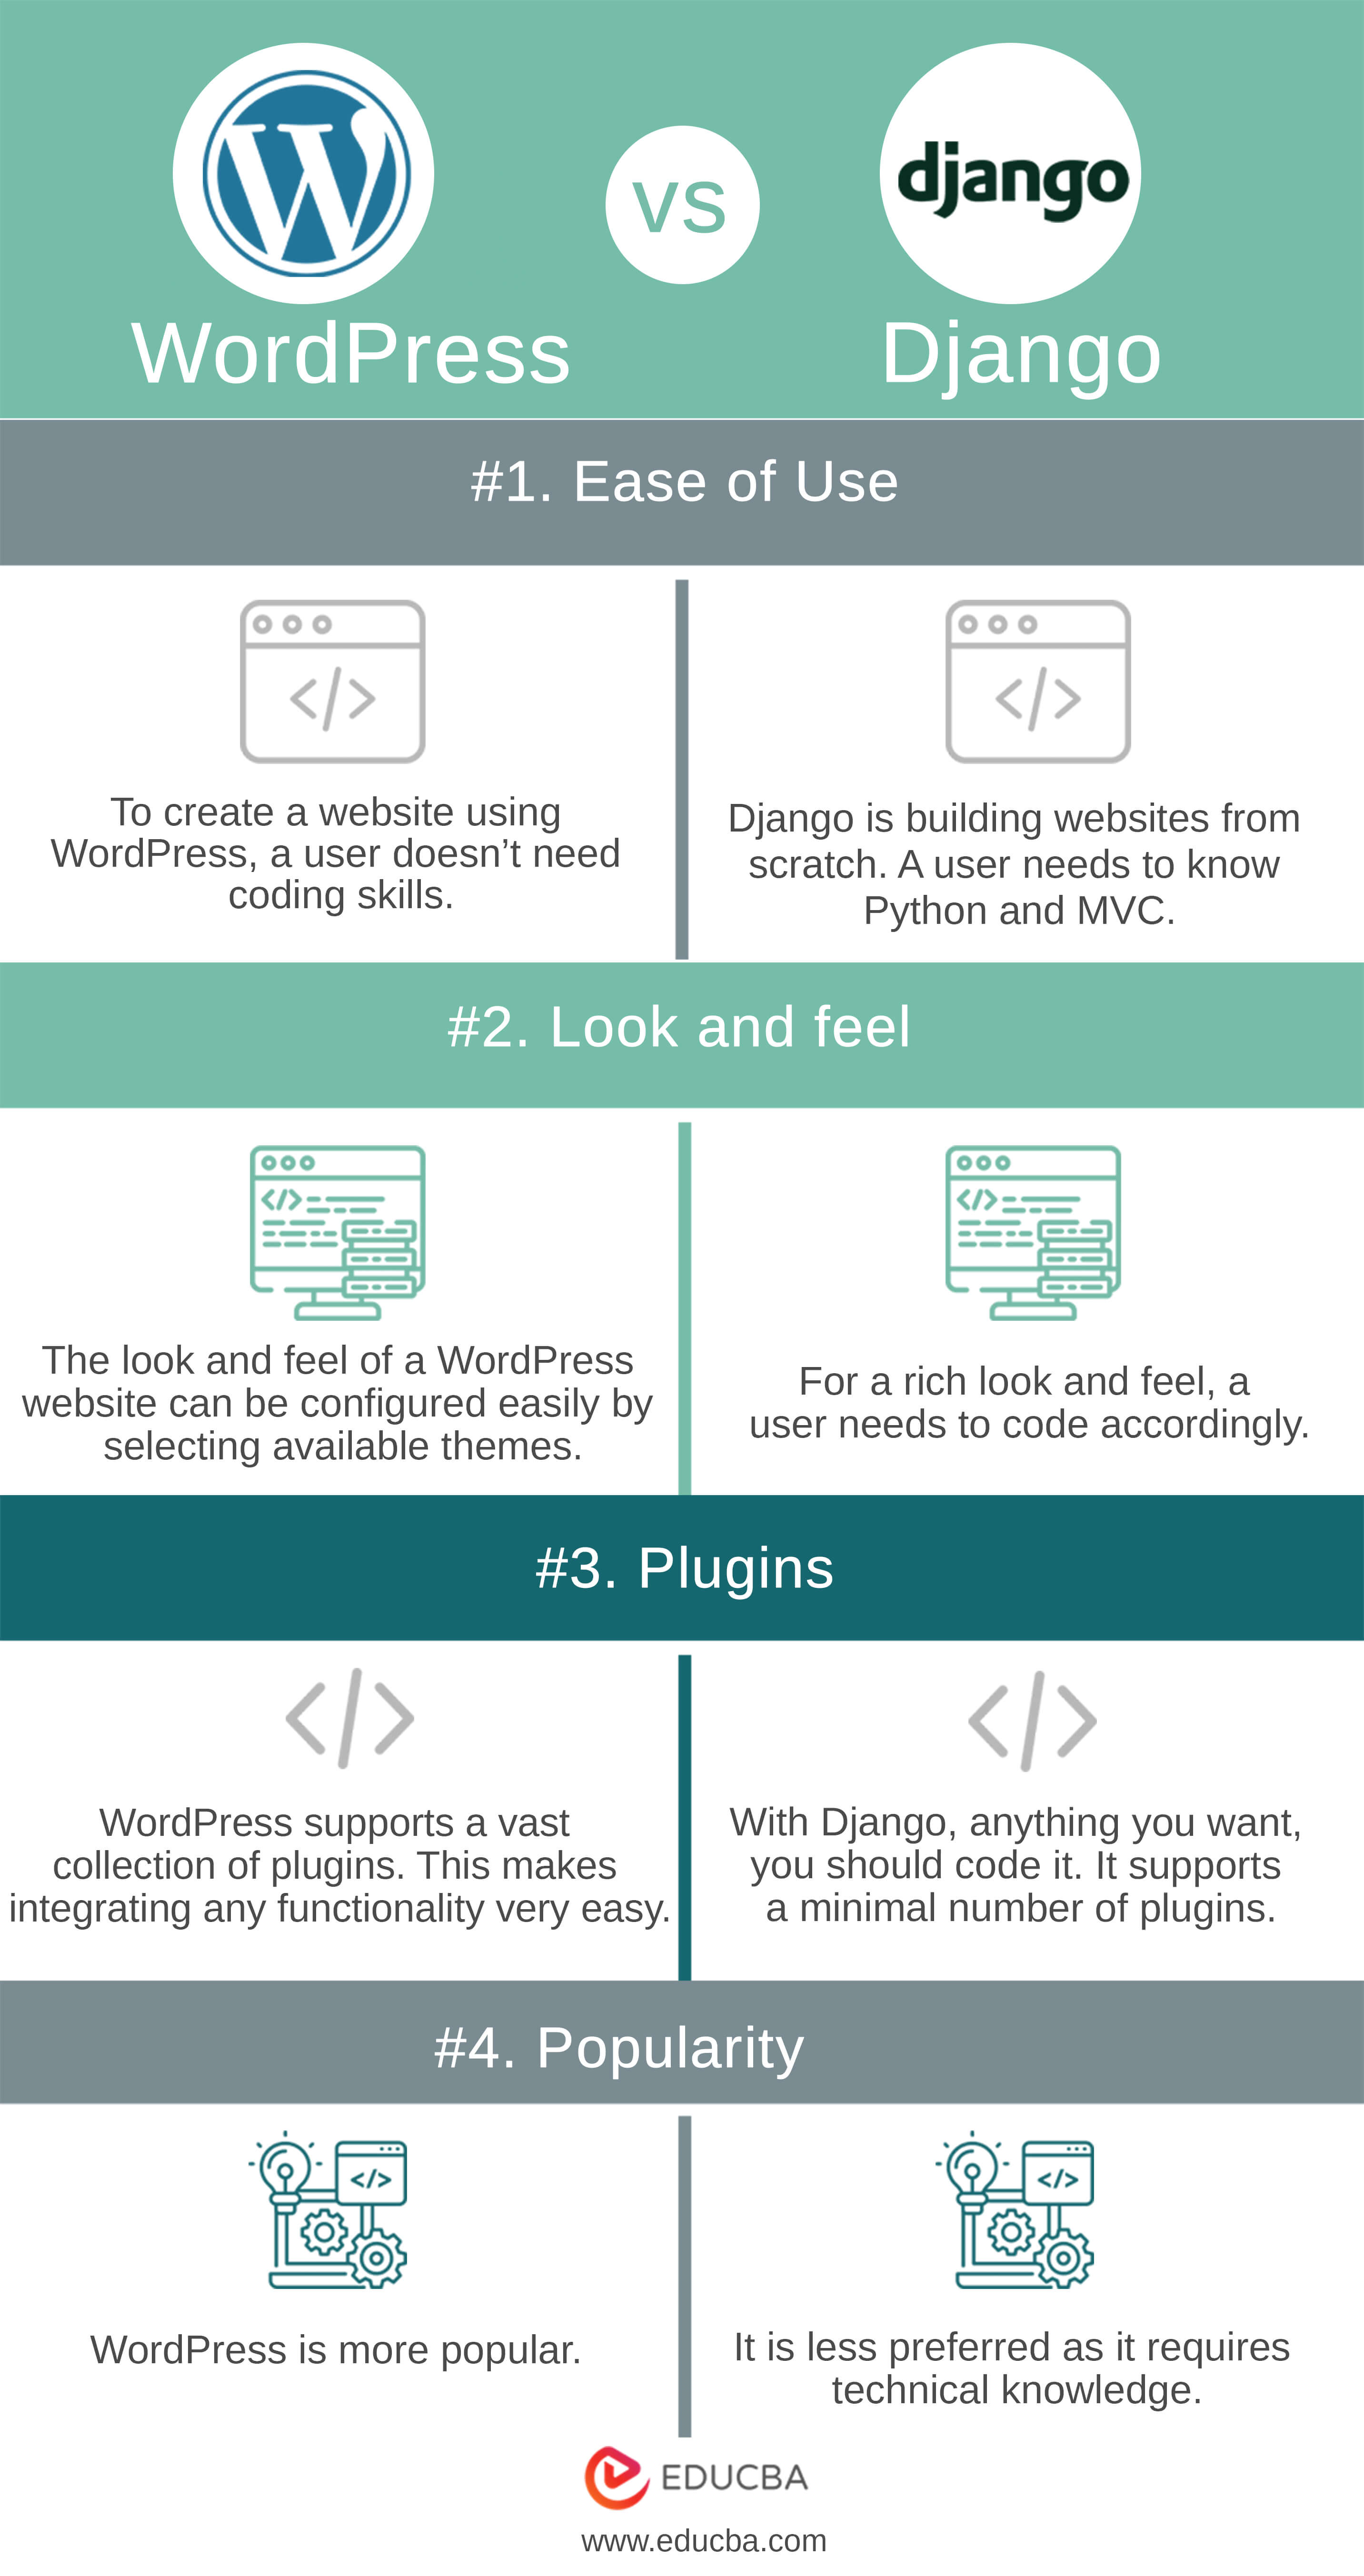 WordPress vs Django infographic